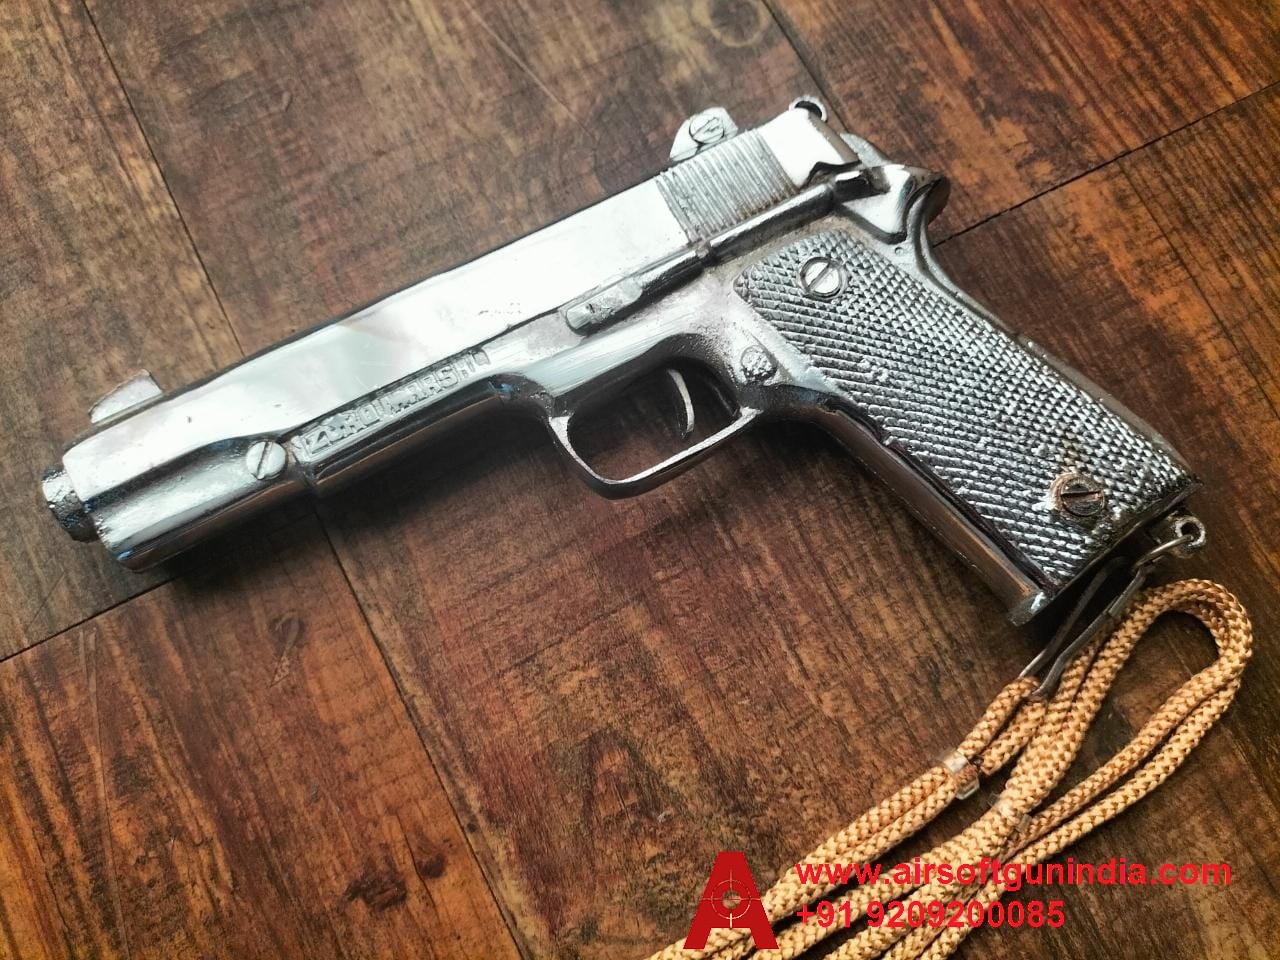 CORK GUN BERETTA STYLE Silver BY AIRSOFT GUN INDIA ( SOUND GUN ) FOR CROP PROTECTION